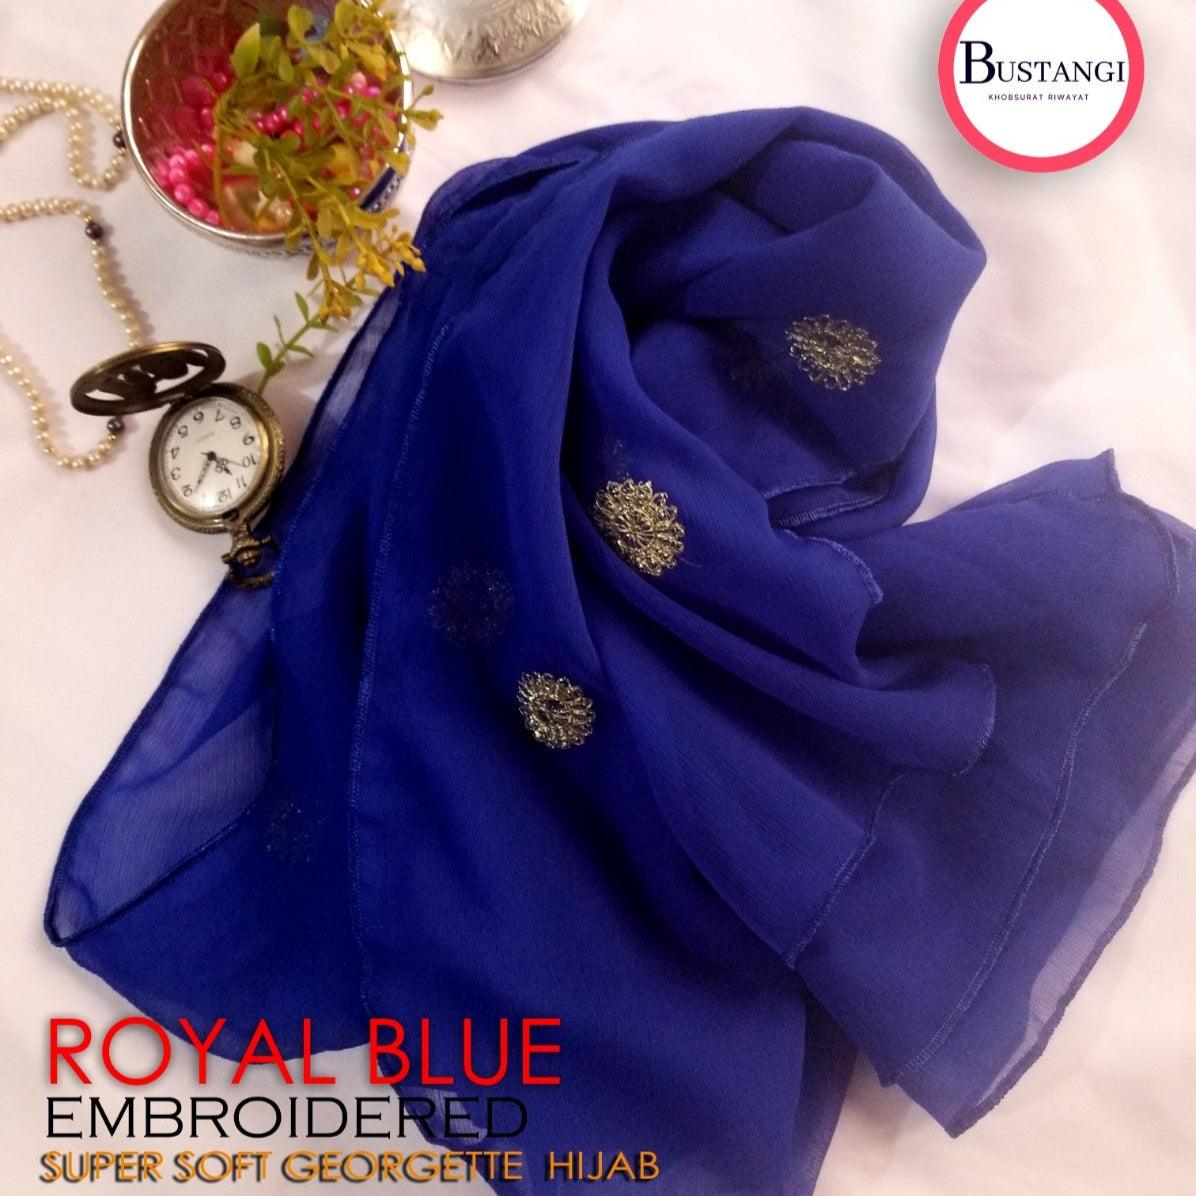 Royal Blue Embroidered Hijab - Bustangi